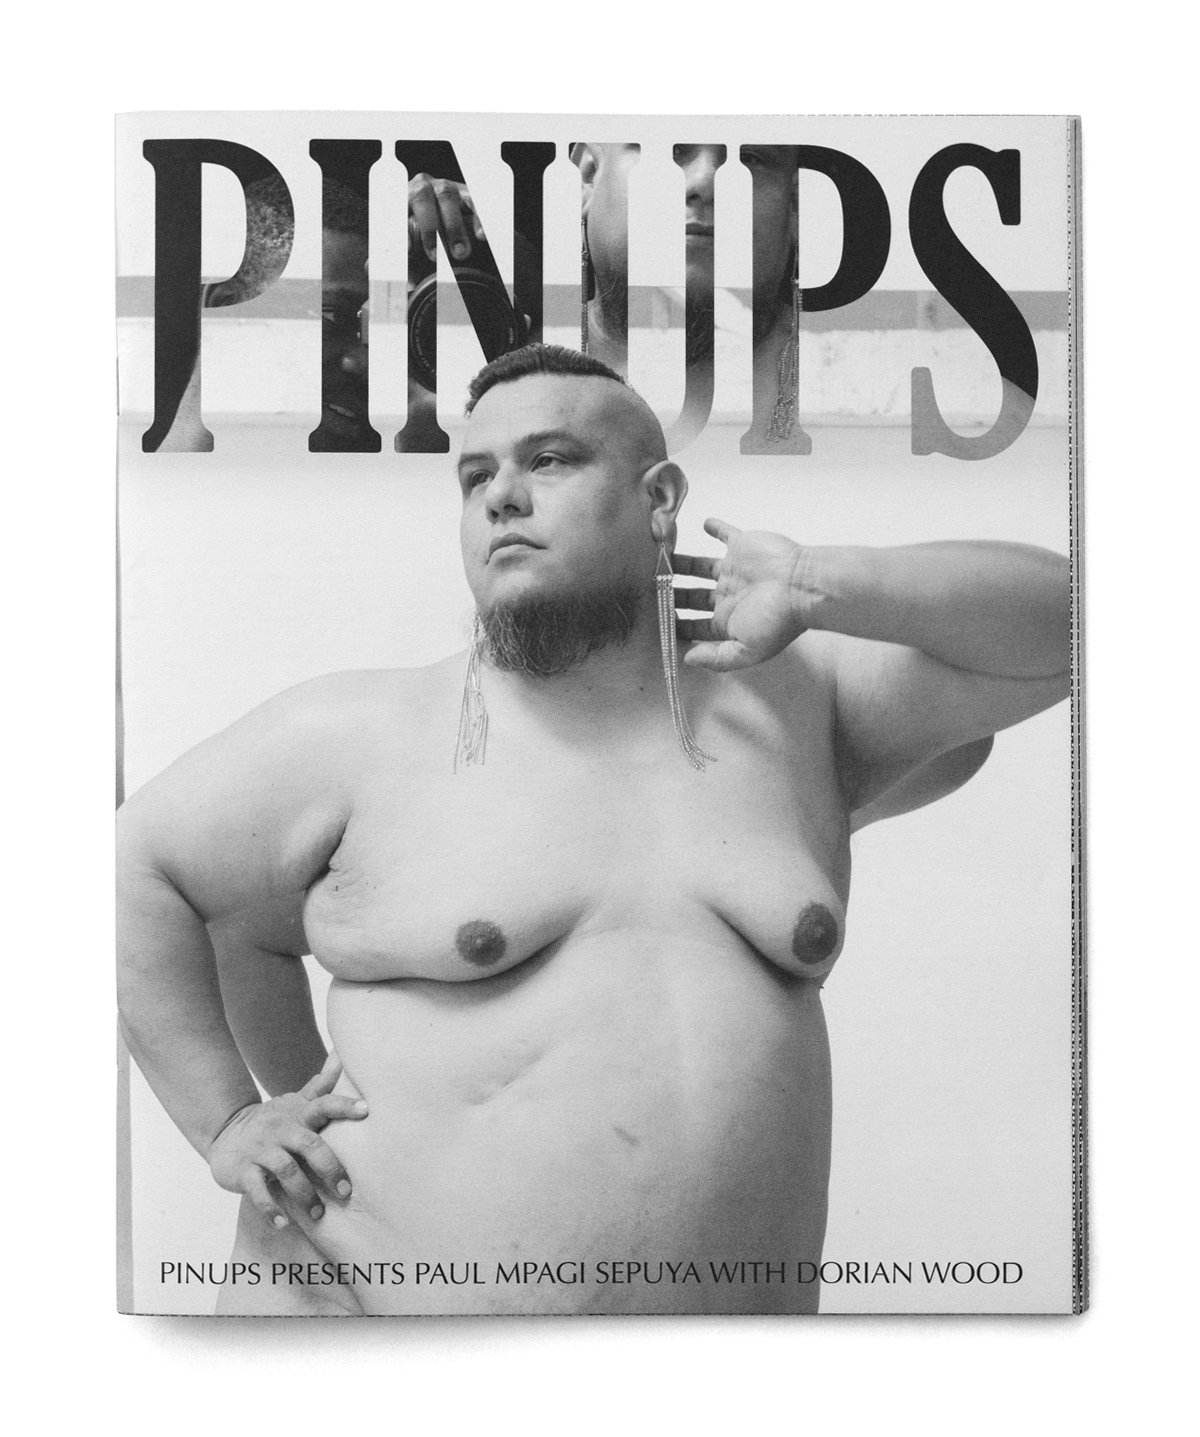 Image of Pinups Presents Paul Mpagi Sepuya with Dorian Wood